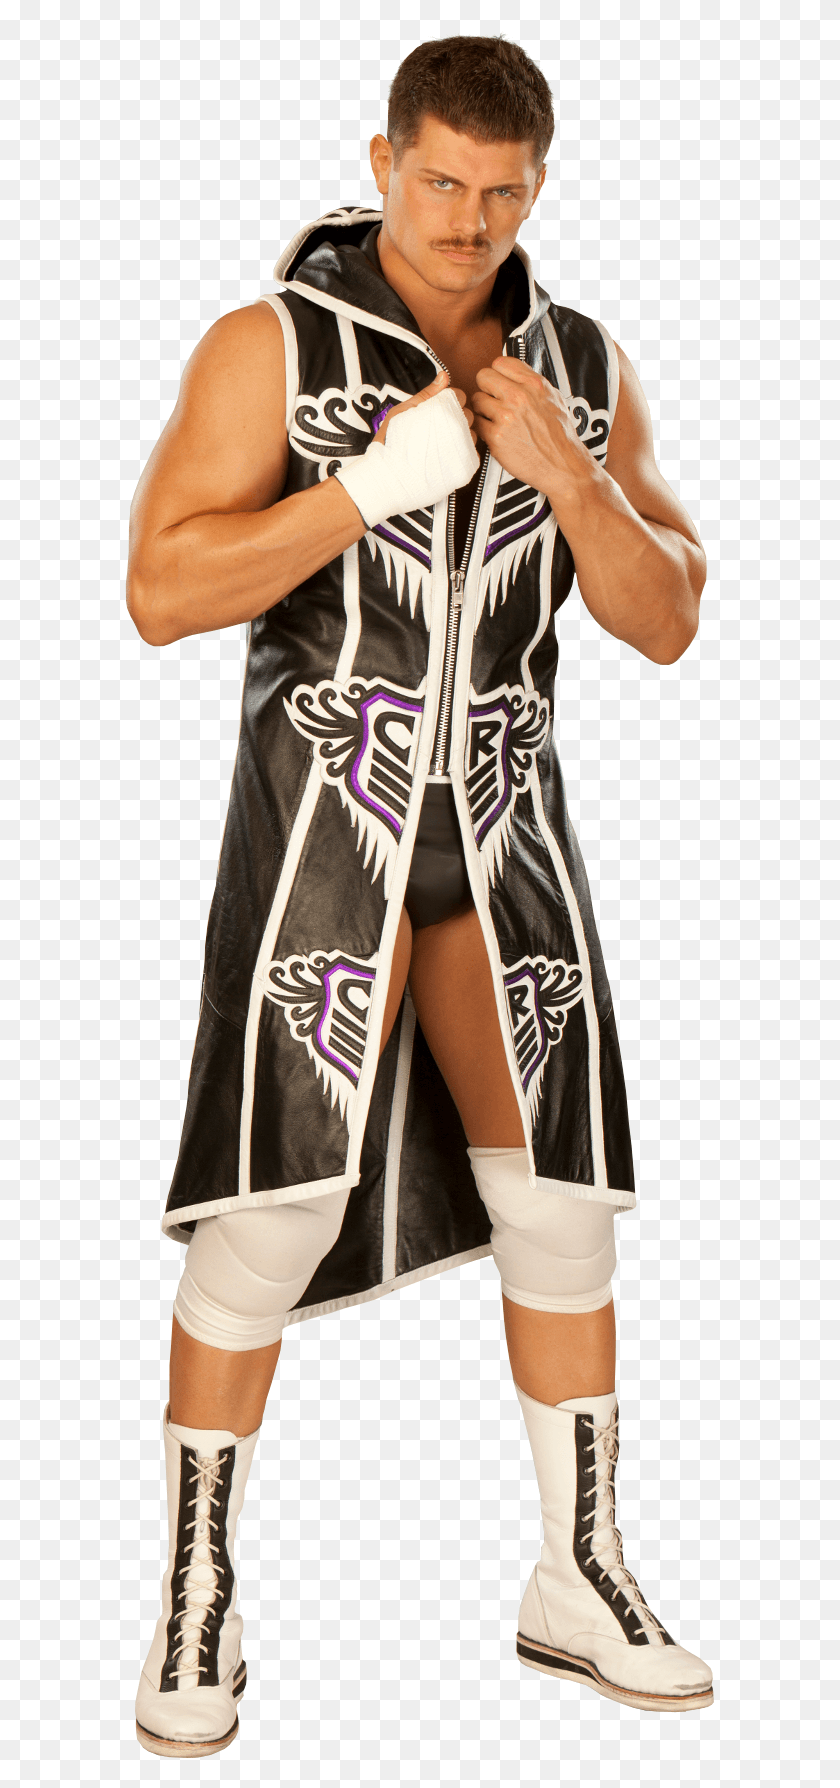 589x1728 Image Cody Rhodes 3 3Png Pro Wrestling Wiki Divas Cody Rhodes 2013, Ropa, Vestimenta, Persona Hd Png